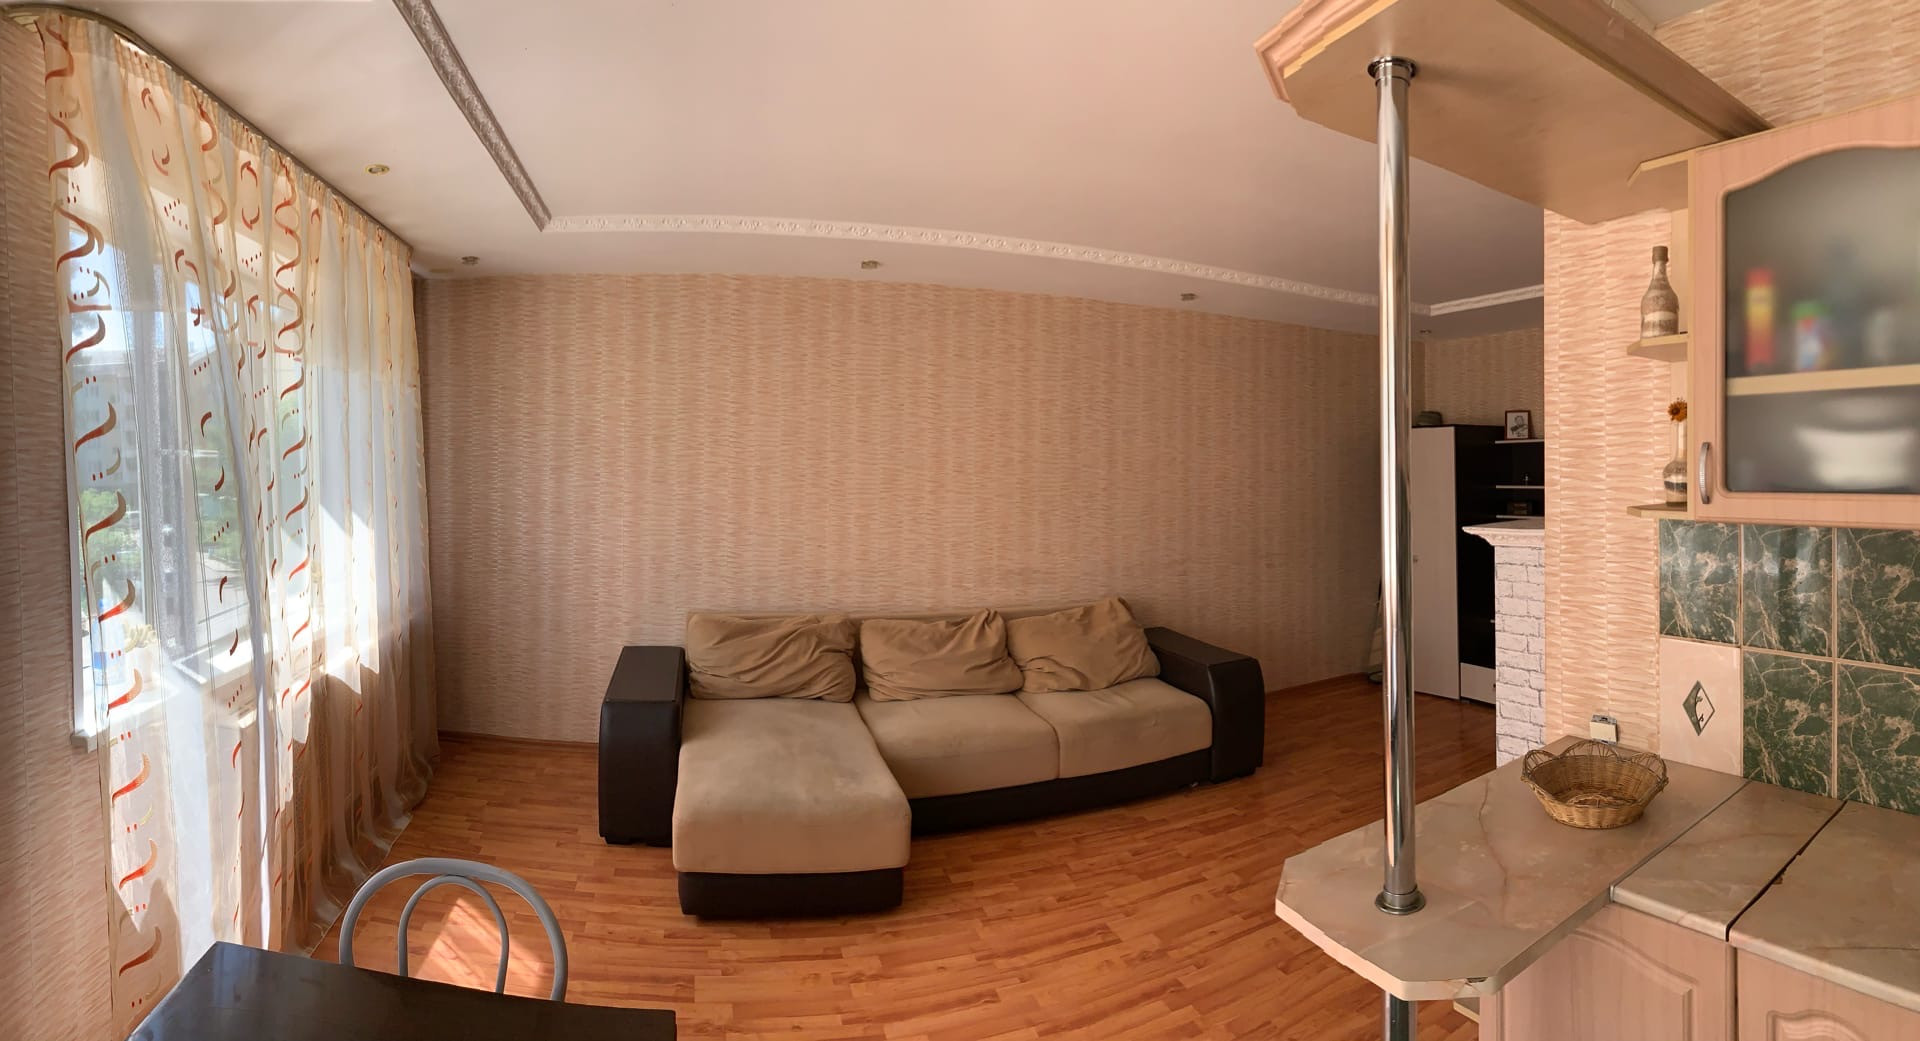 2 комнатная квартира железногорске красноярского края